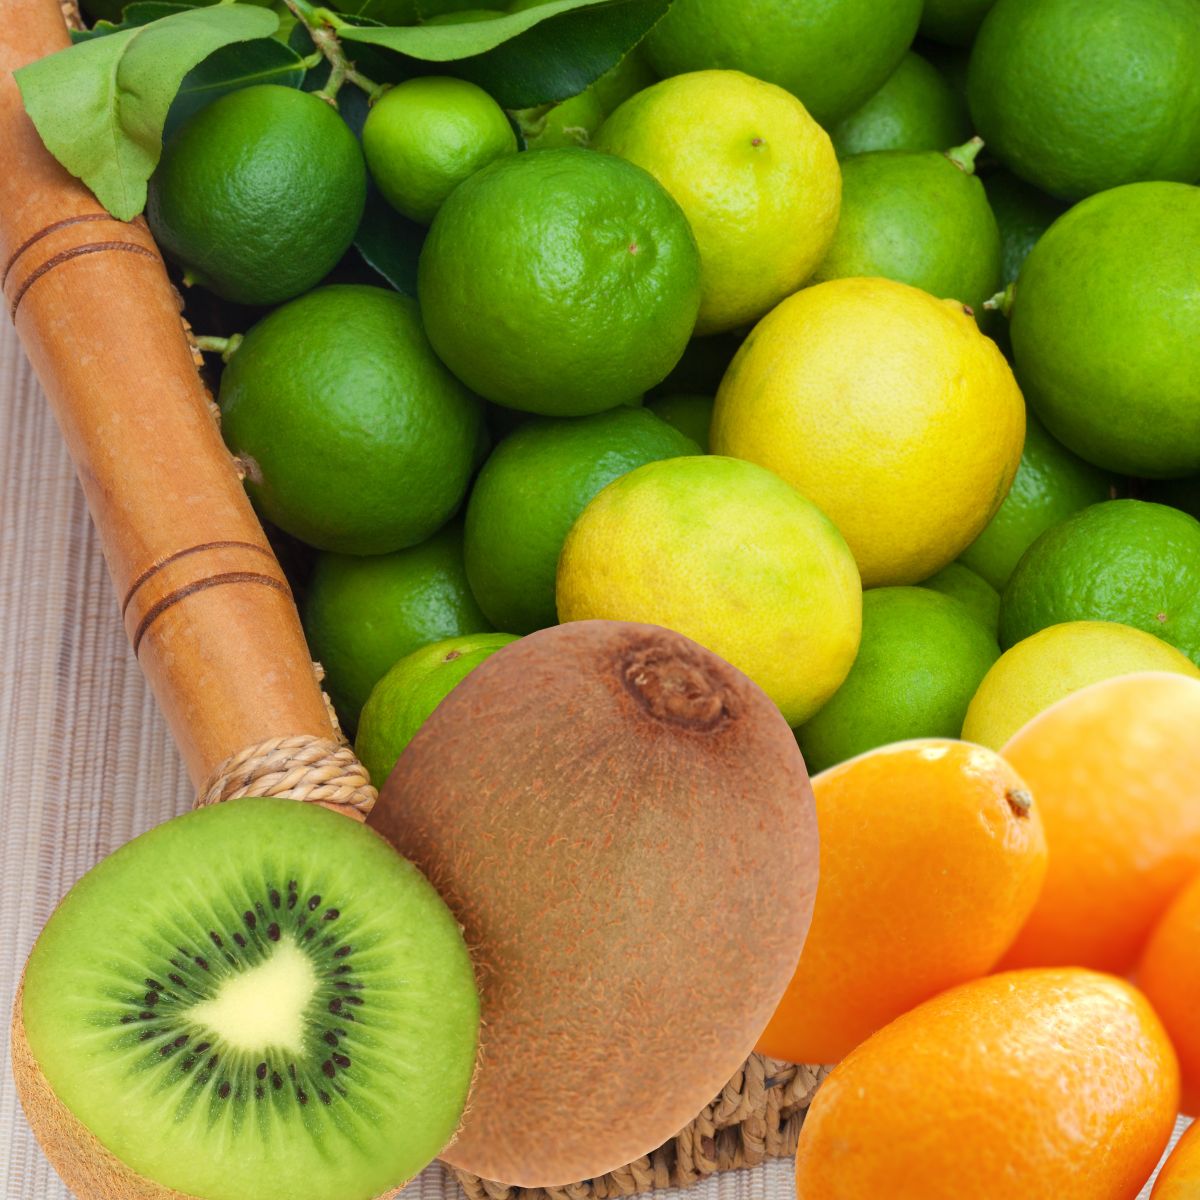 fruits in a basket: kiwi, kumquats, and key limes.